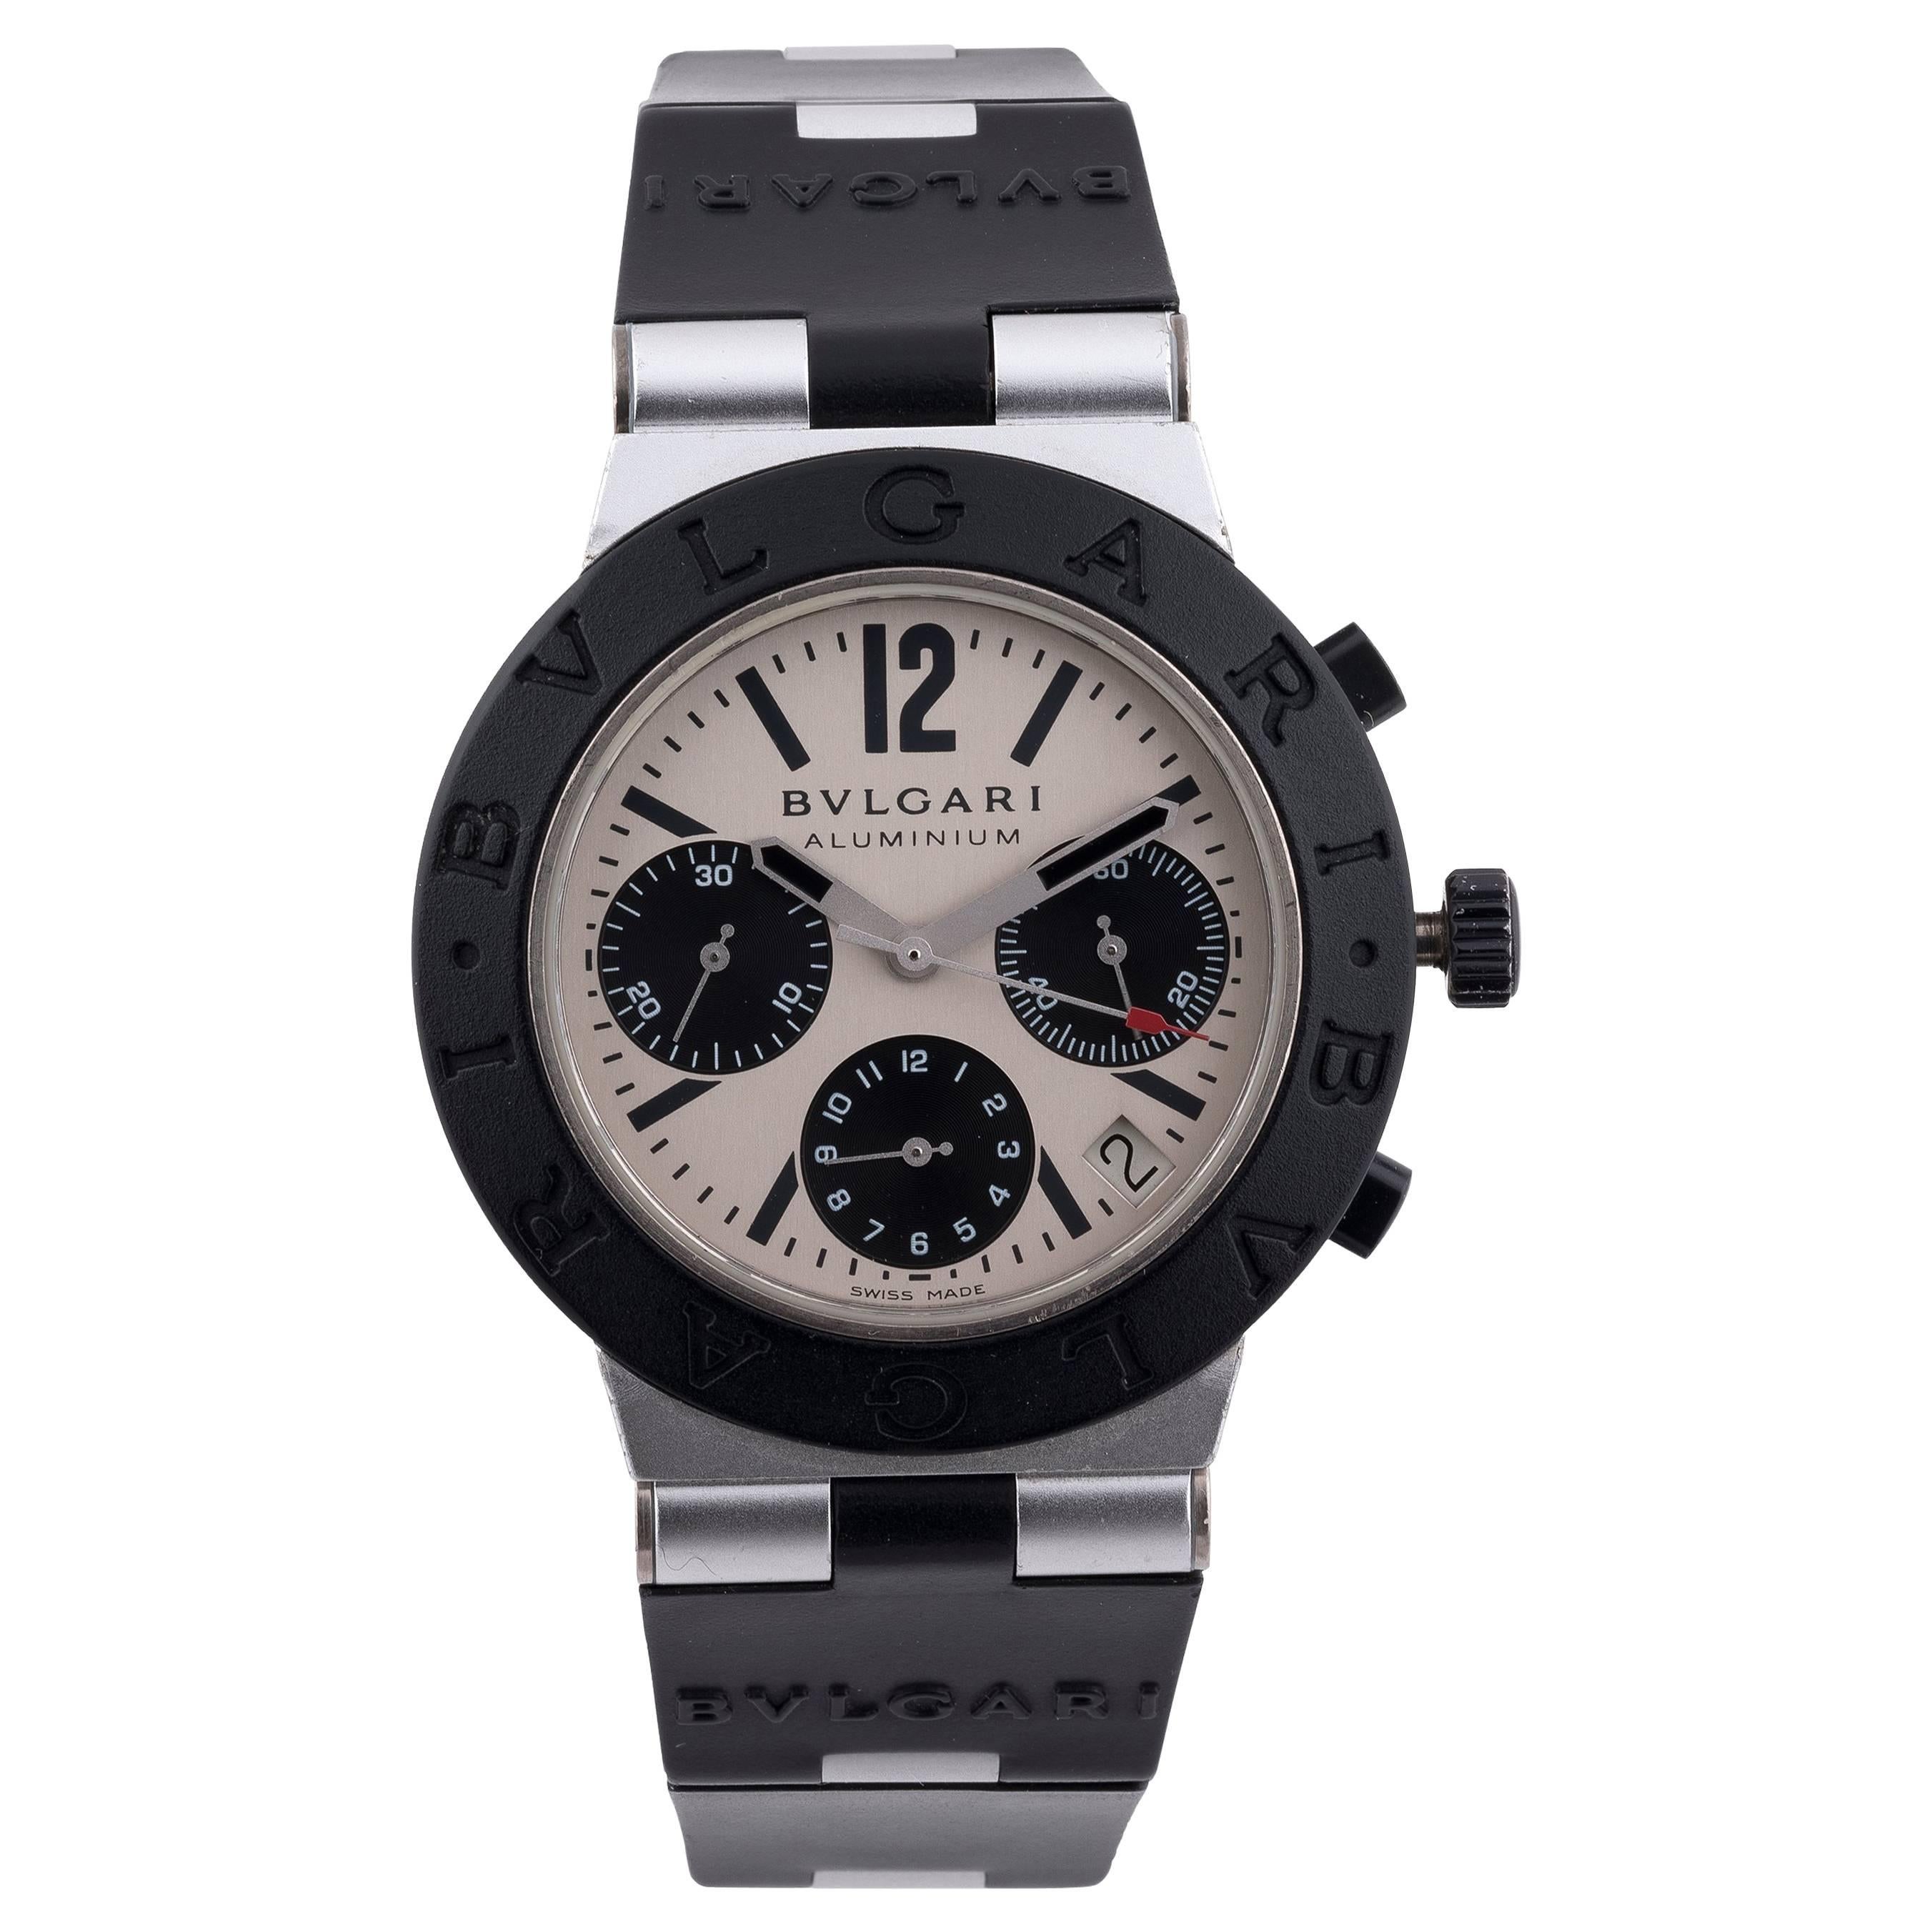 Bulgari Aluminum Diagono Chronograph Automatic wristwatch